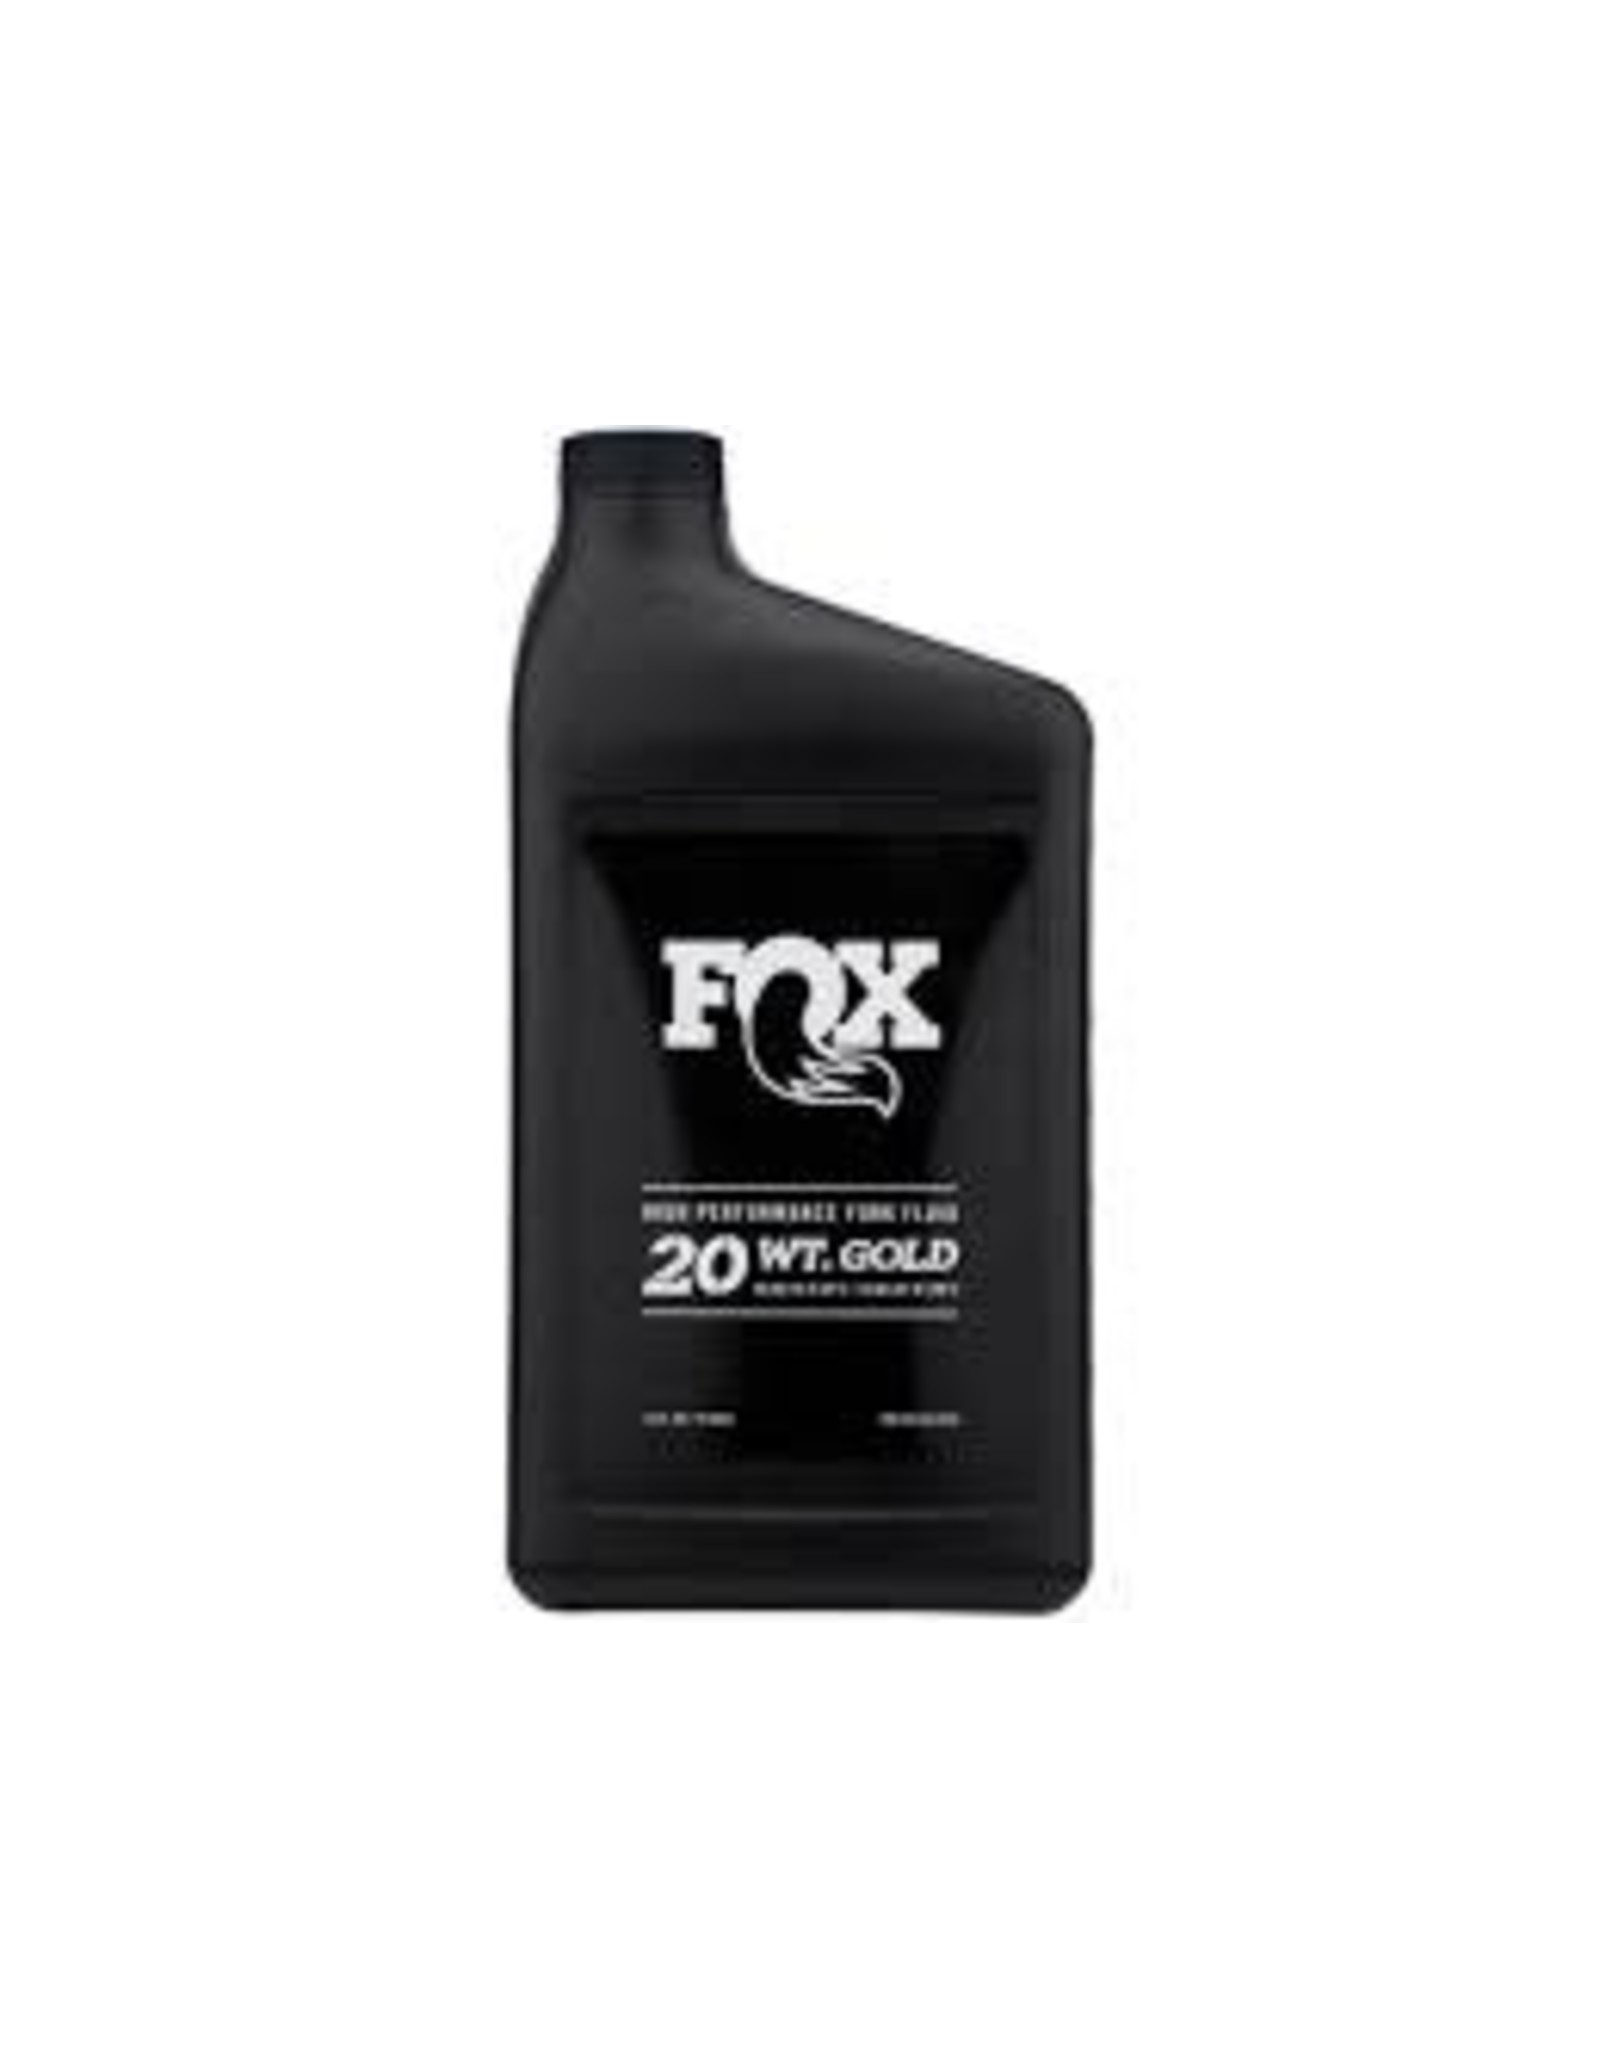 FOX FOX 20 WT. GOLD FORK FLUID